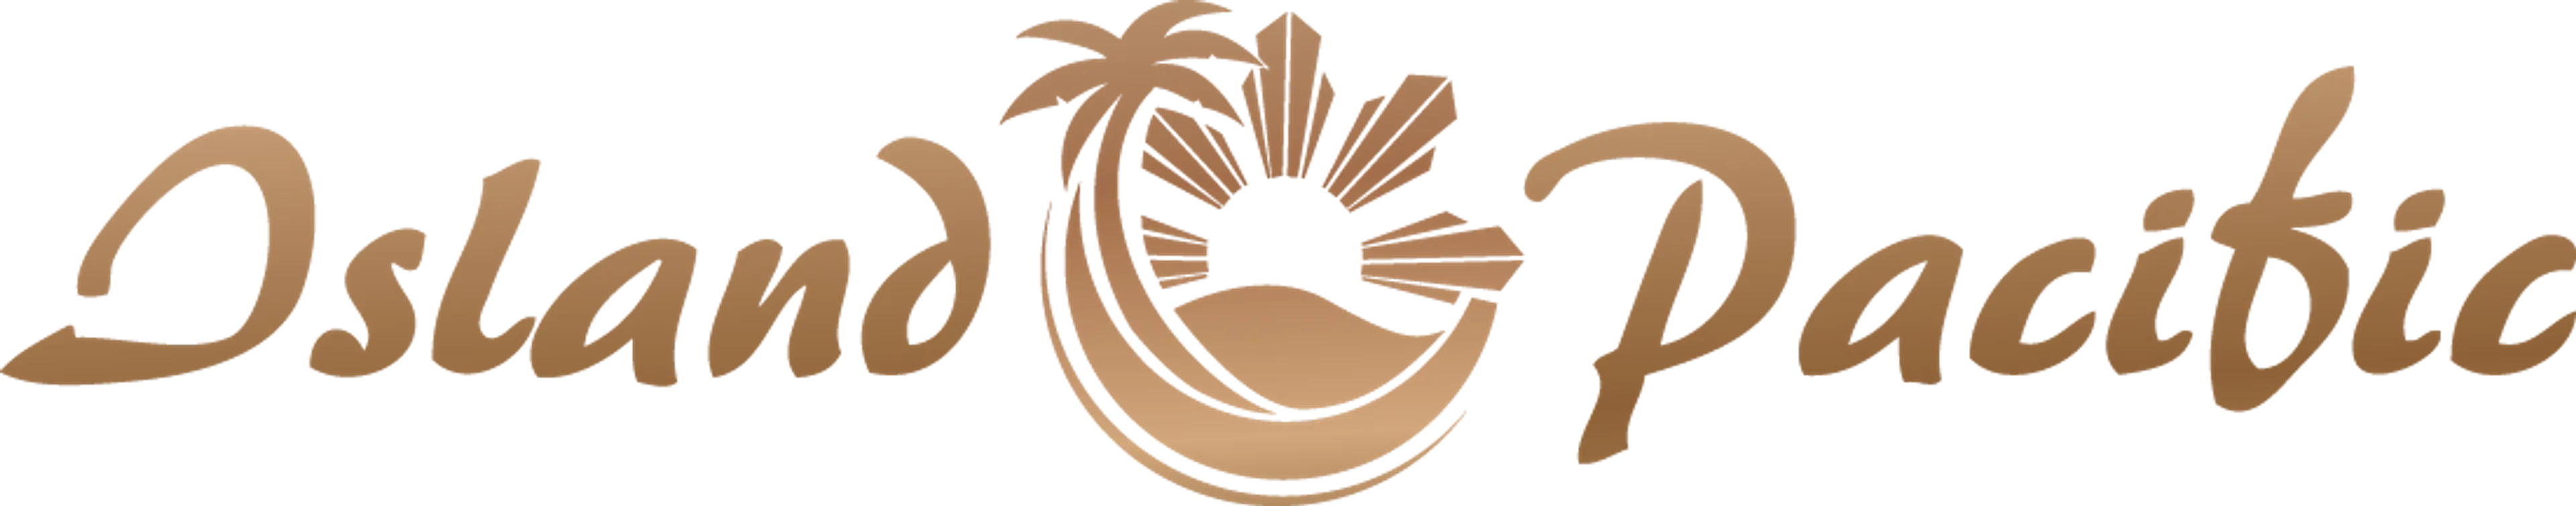 ISLAND PACIFIC MARKET logo